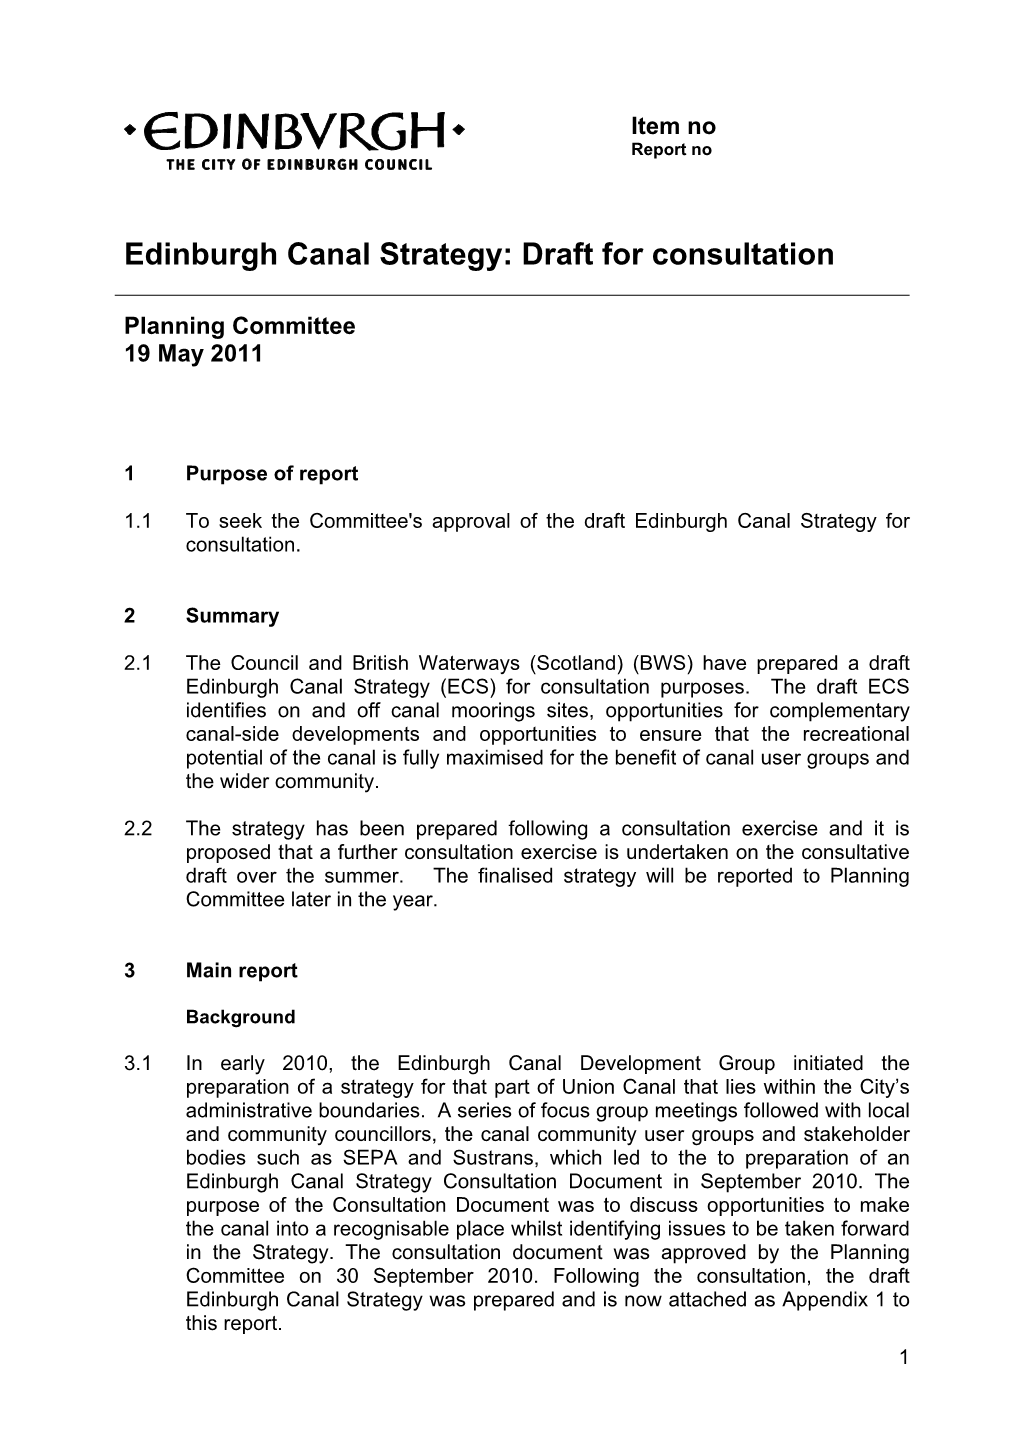 Edinburgh Canal Strategy: Draft for Consultation